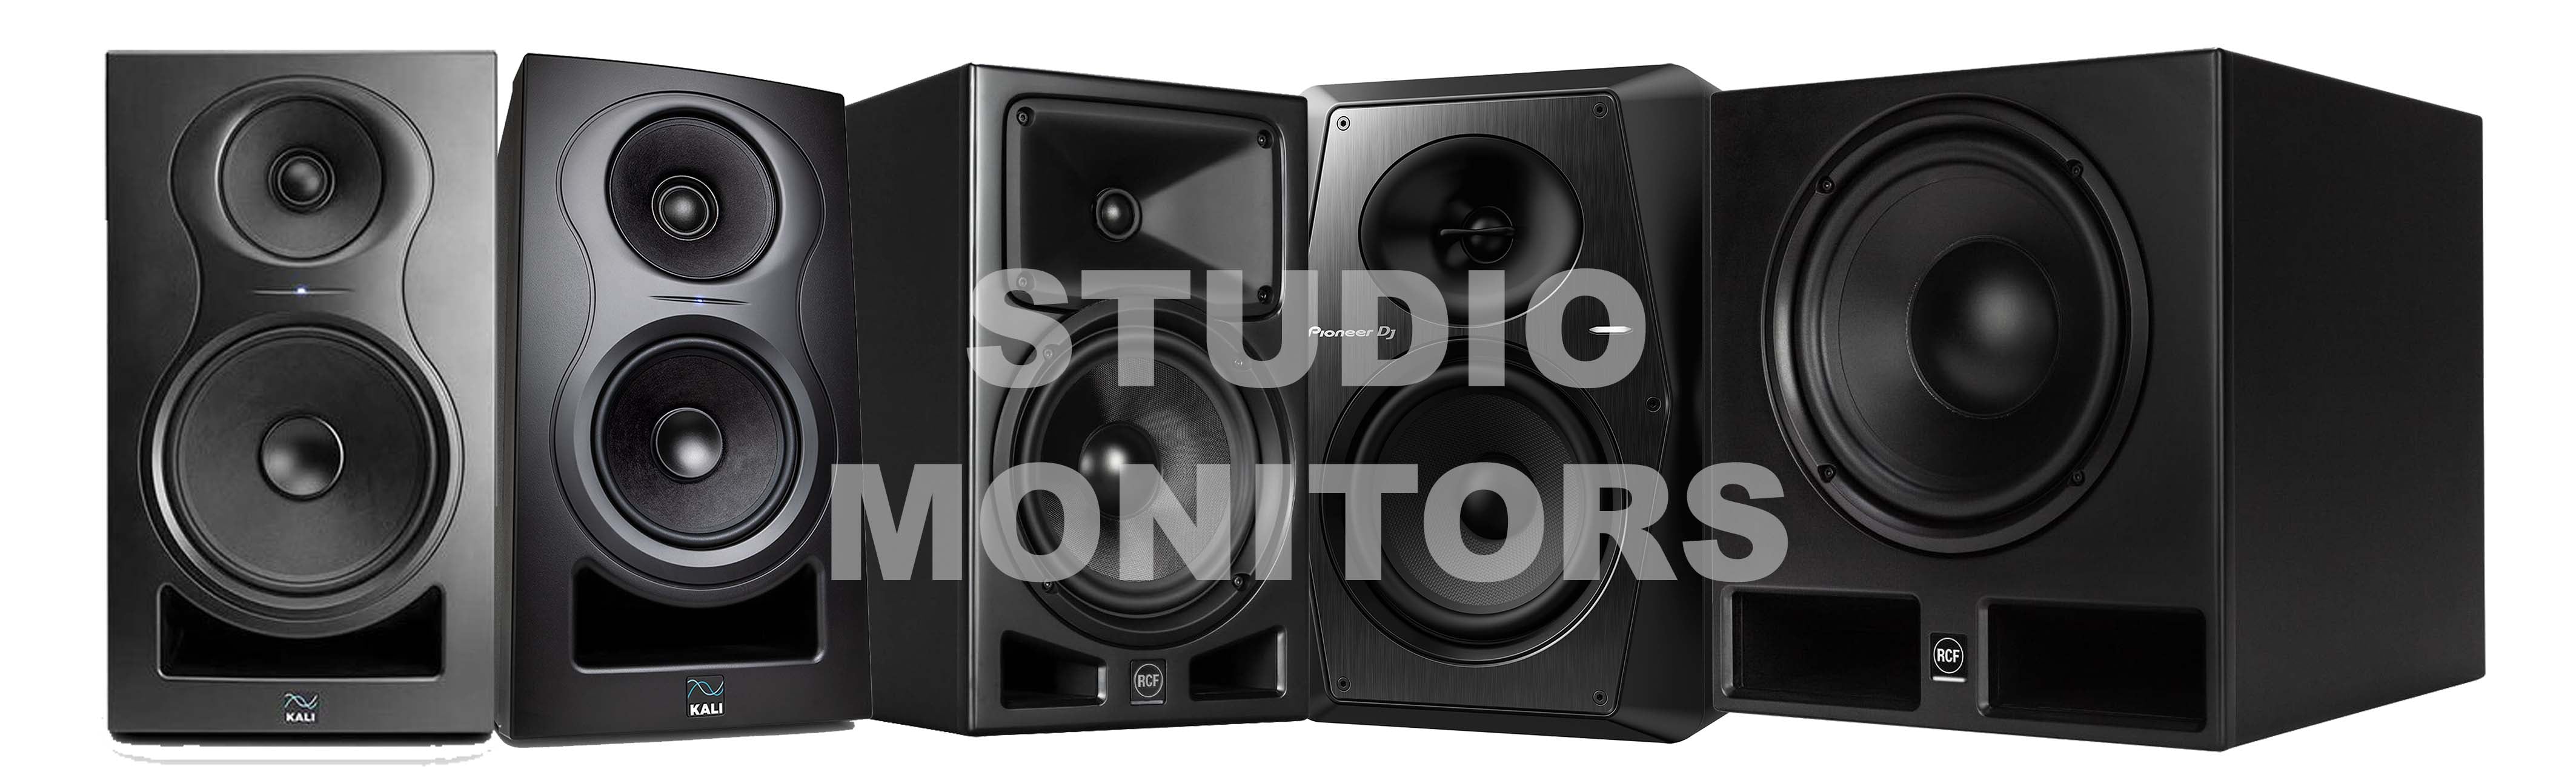 Studio Monitors